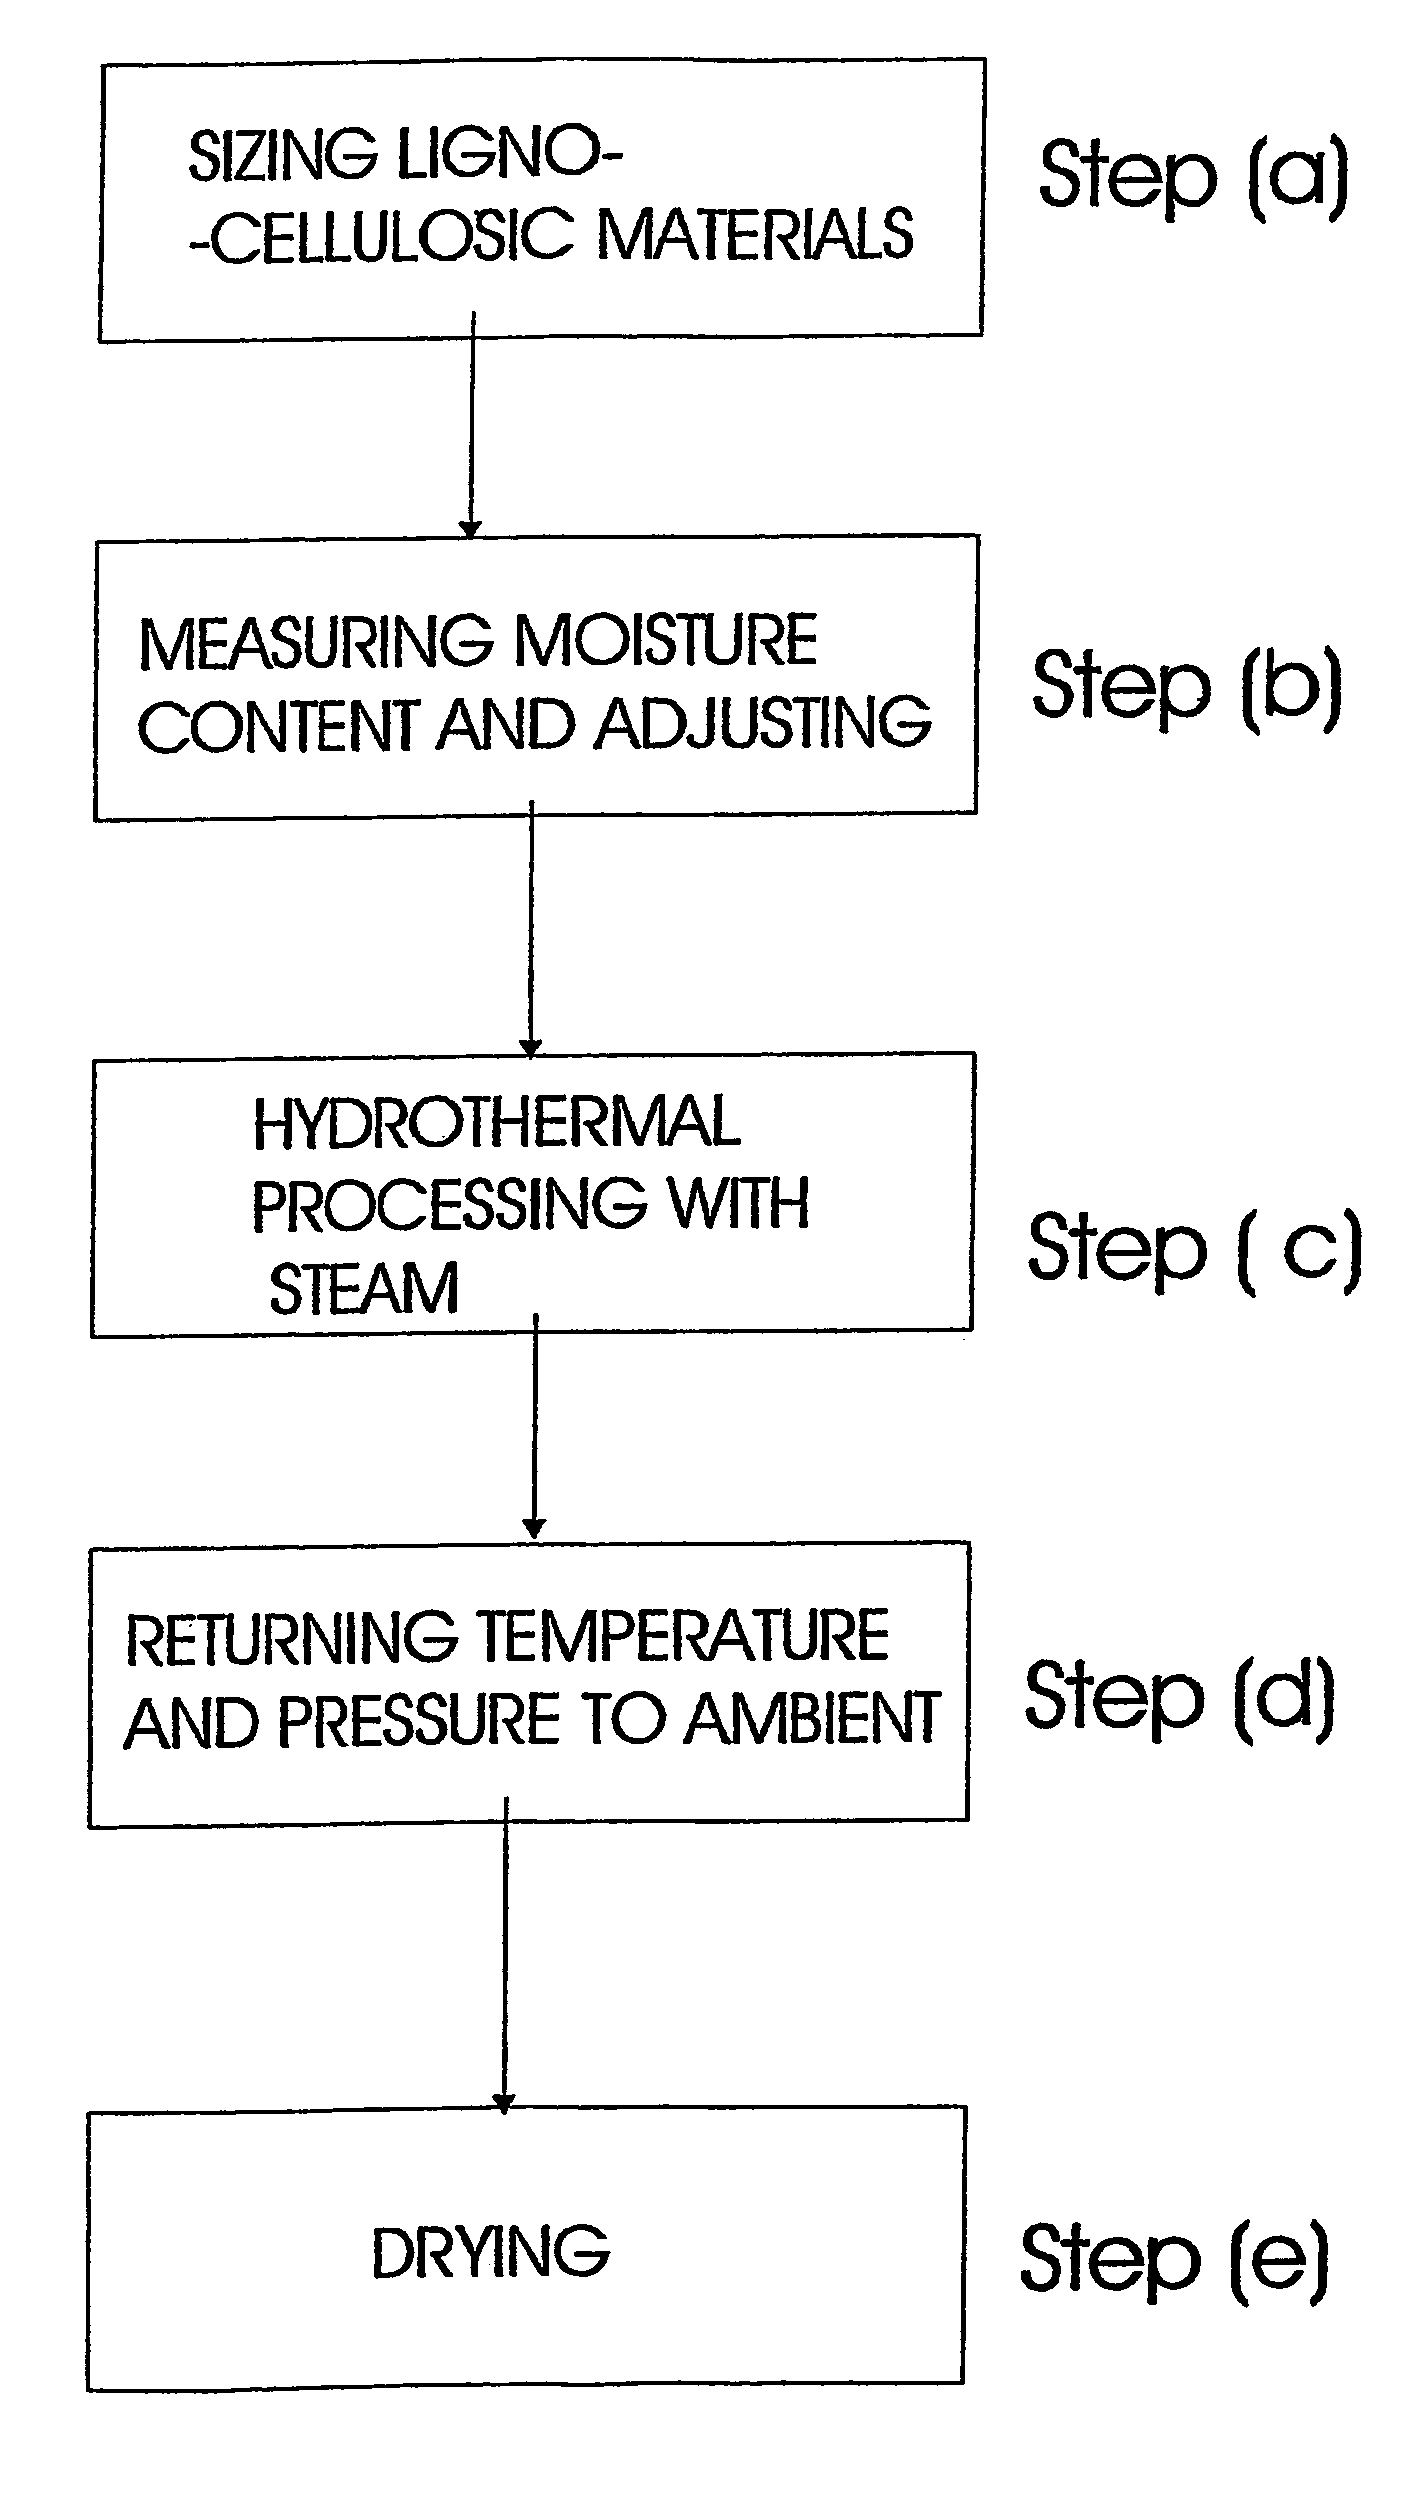 Processing of ligno-cellulose materials